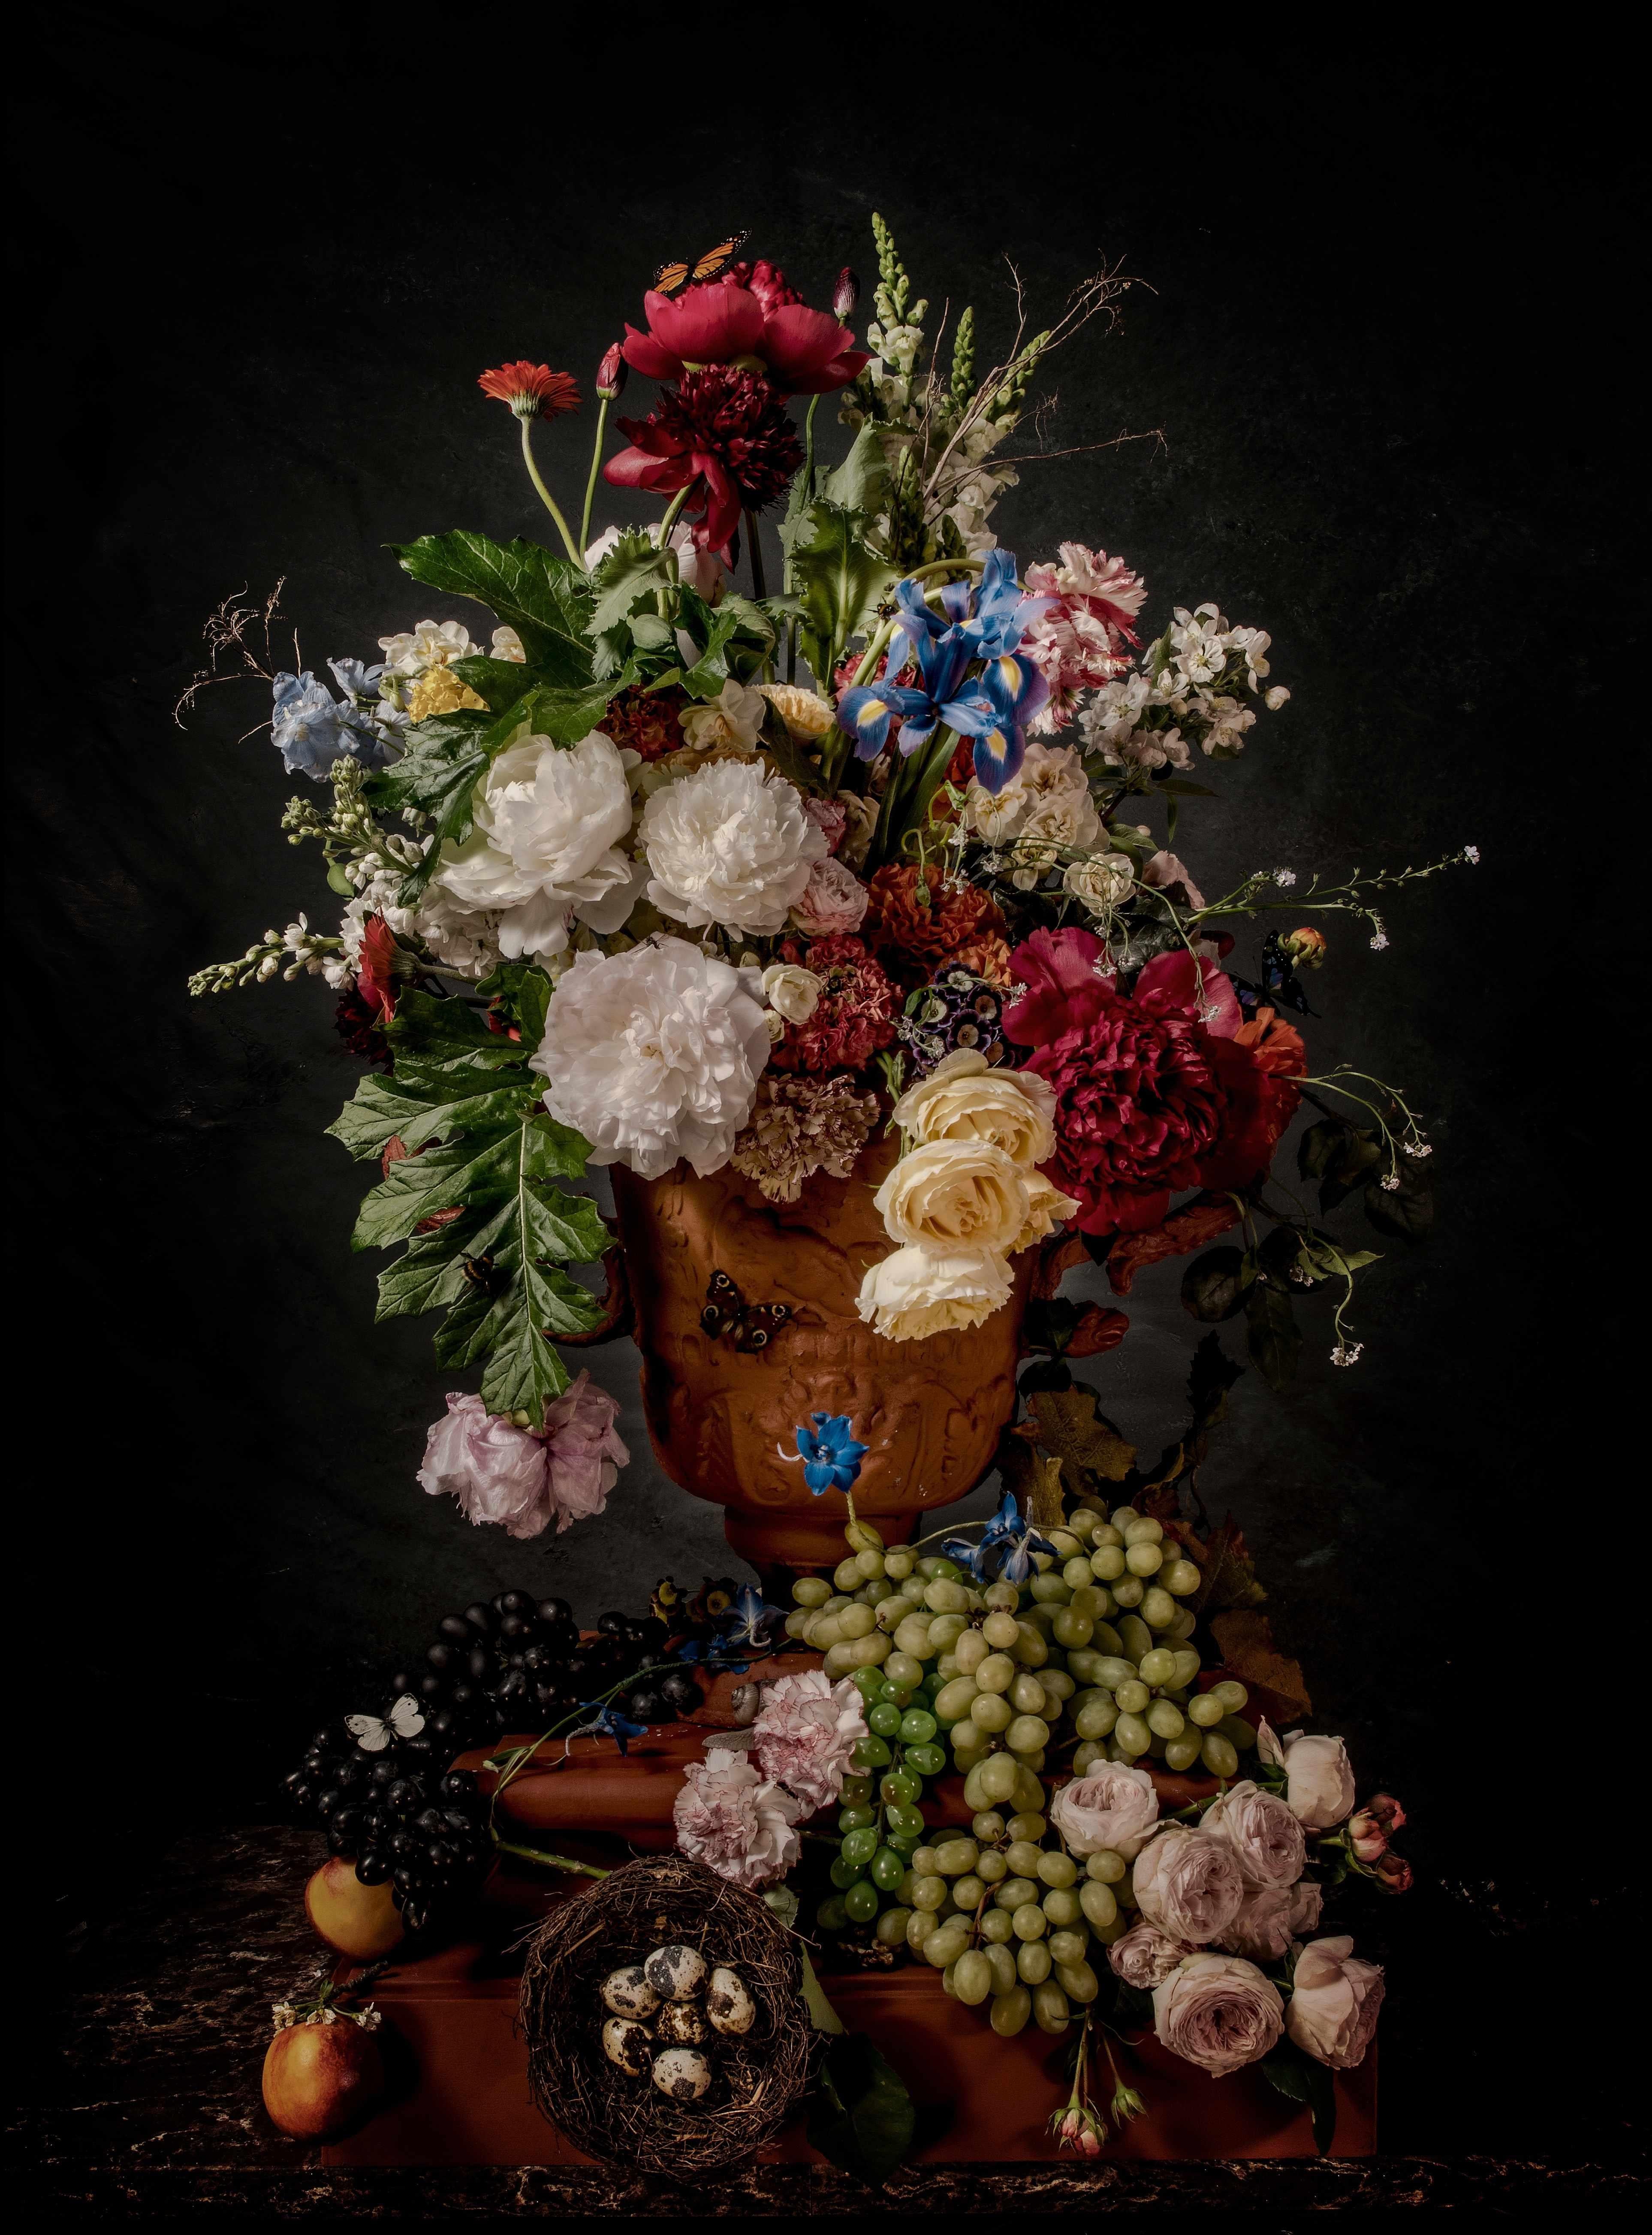 Jeff Robb Color Photograph – Jan Van Huysum 2.0